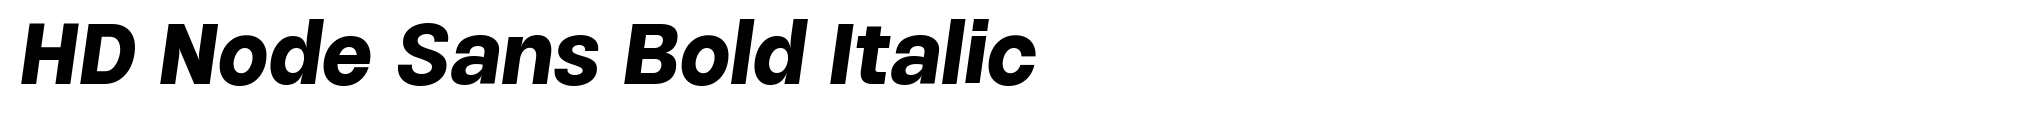 HD Node Sans Bold Italic image